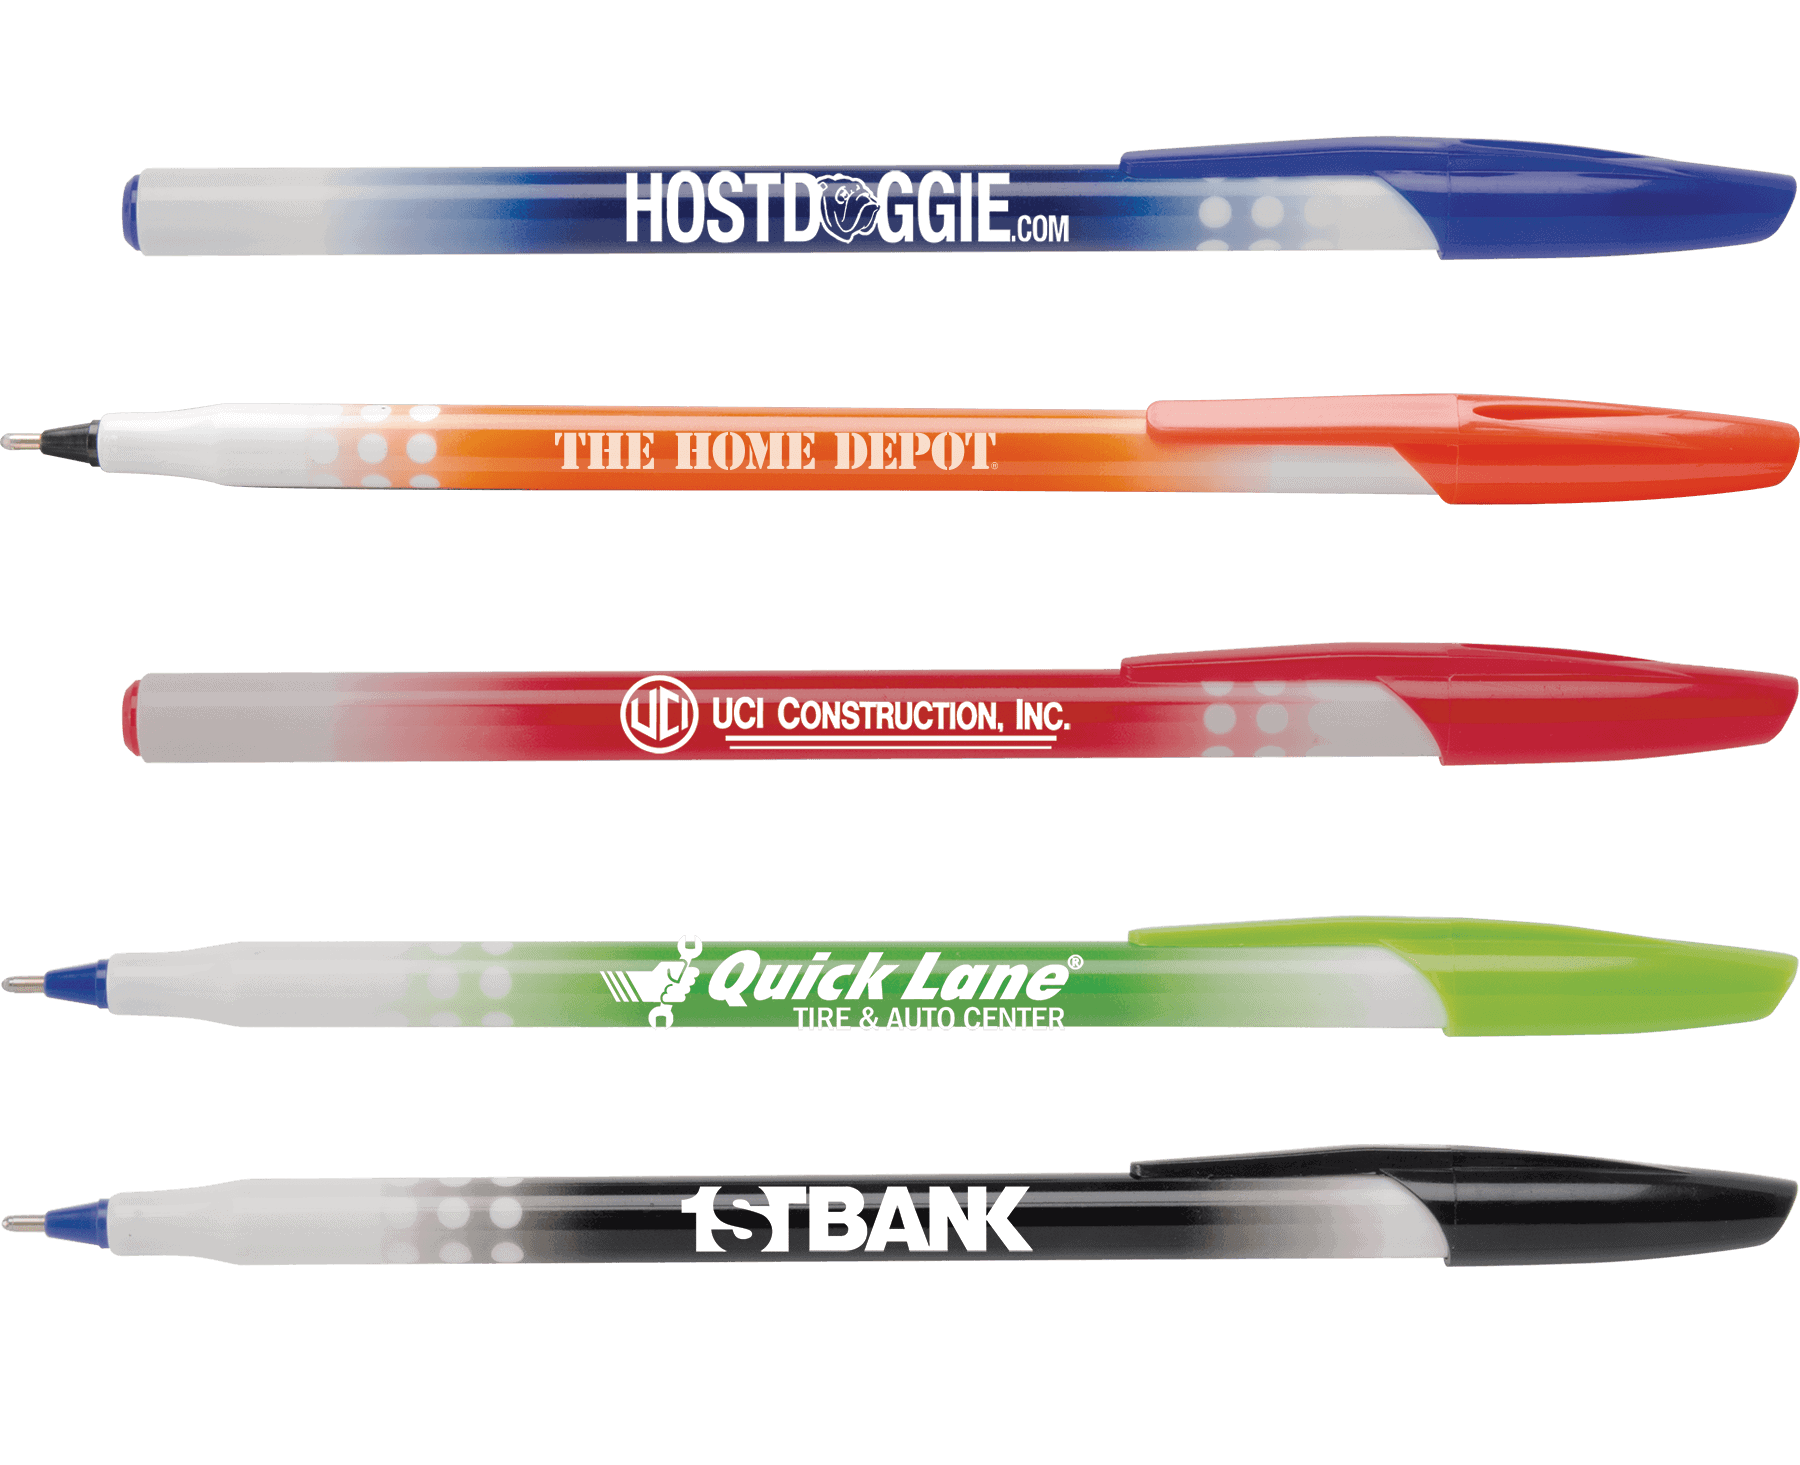 Bic style pens. Imprint name. logo, slogan. Great promotional giveaway.